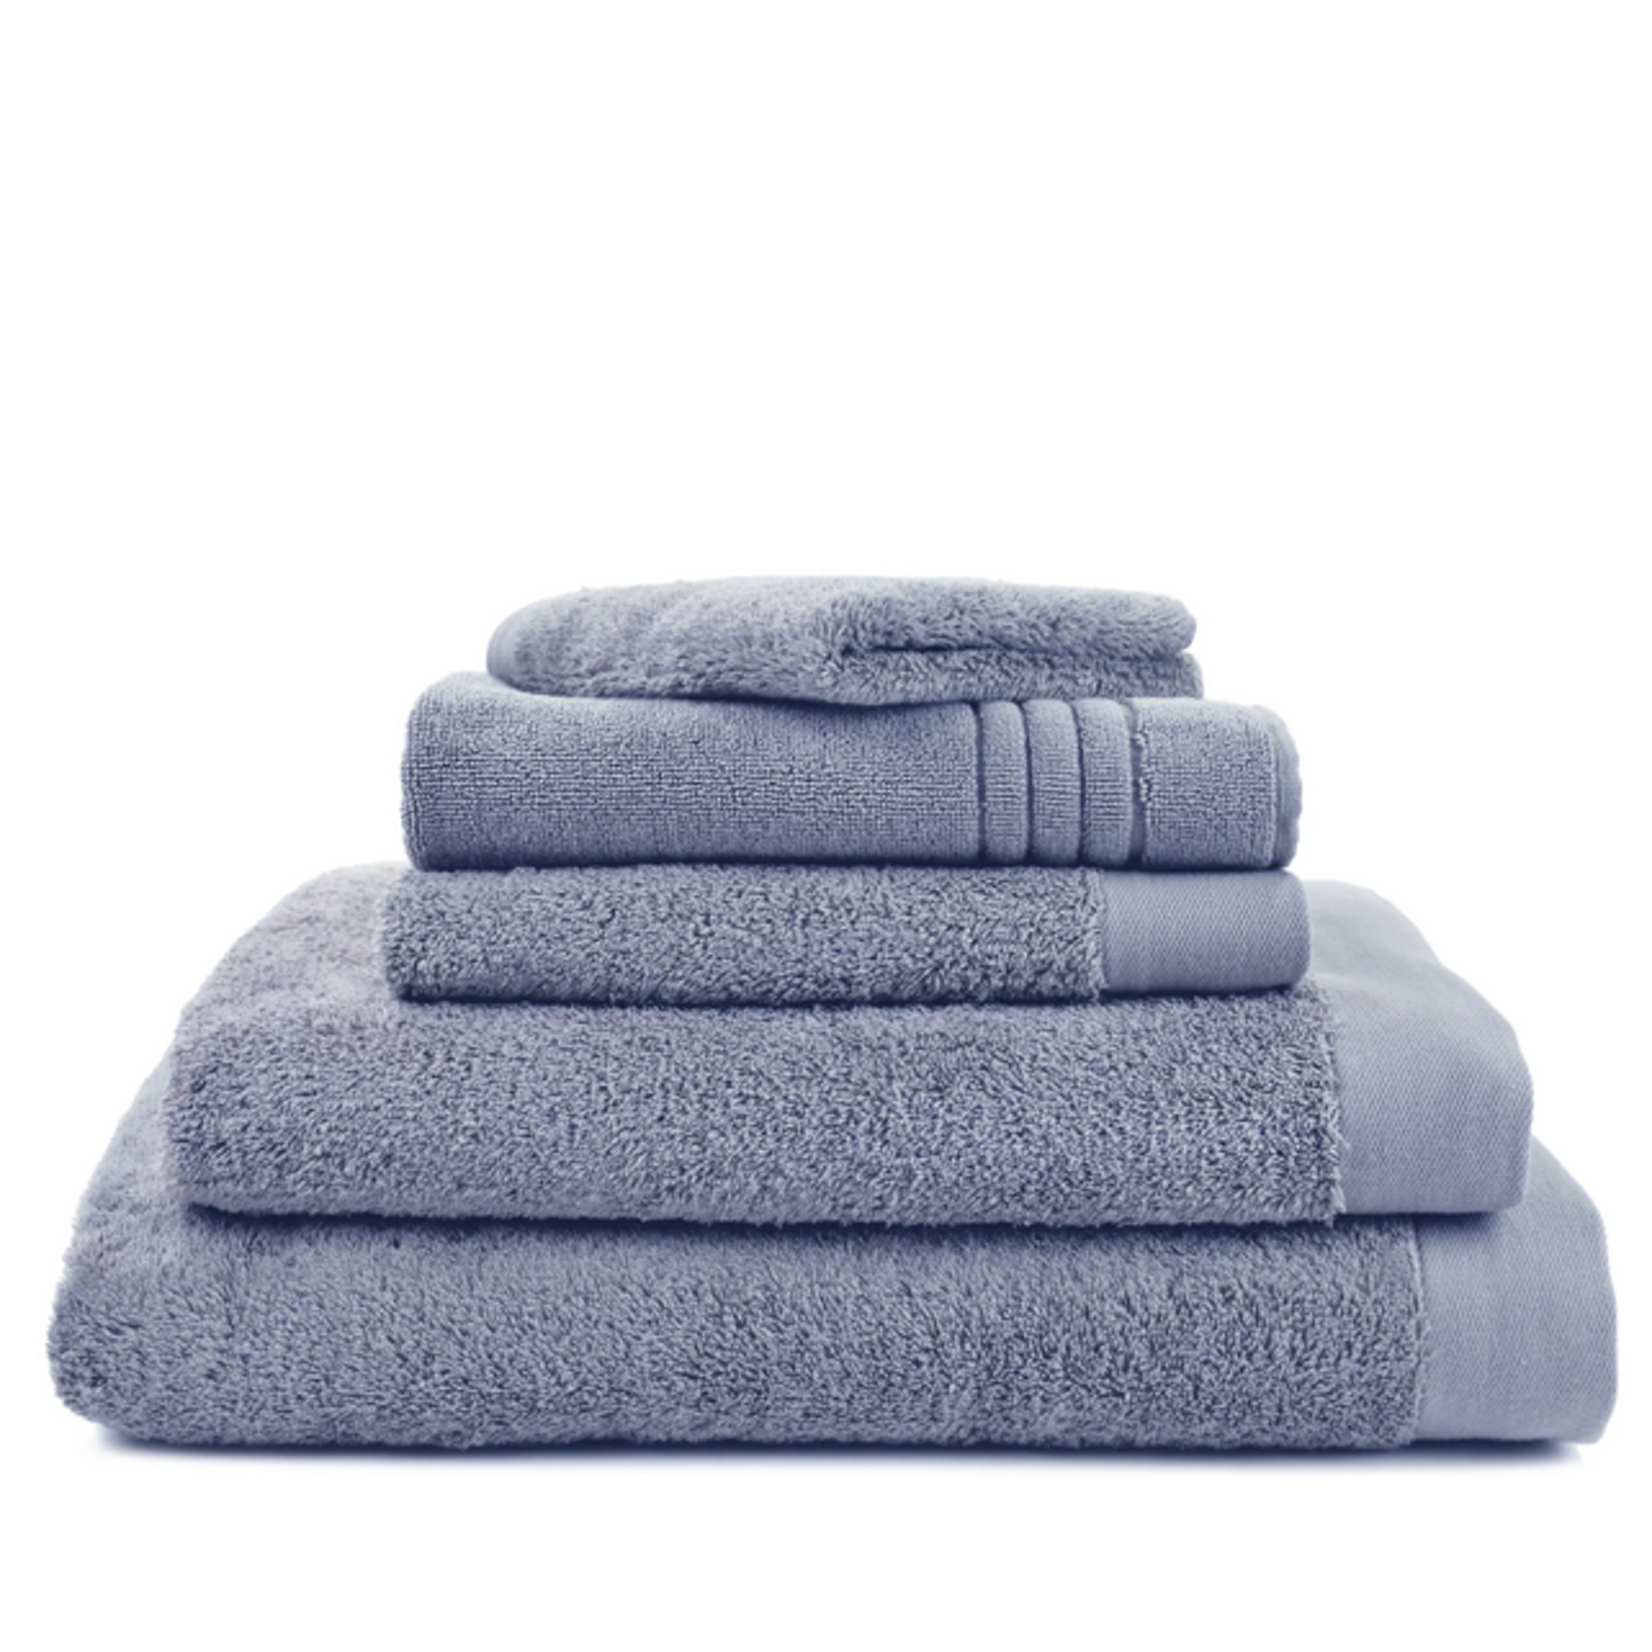 St. Geneve Puro 100% Egyptian Cotton Double Towel Set in Denim